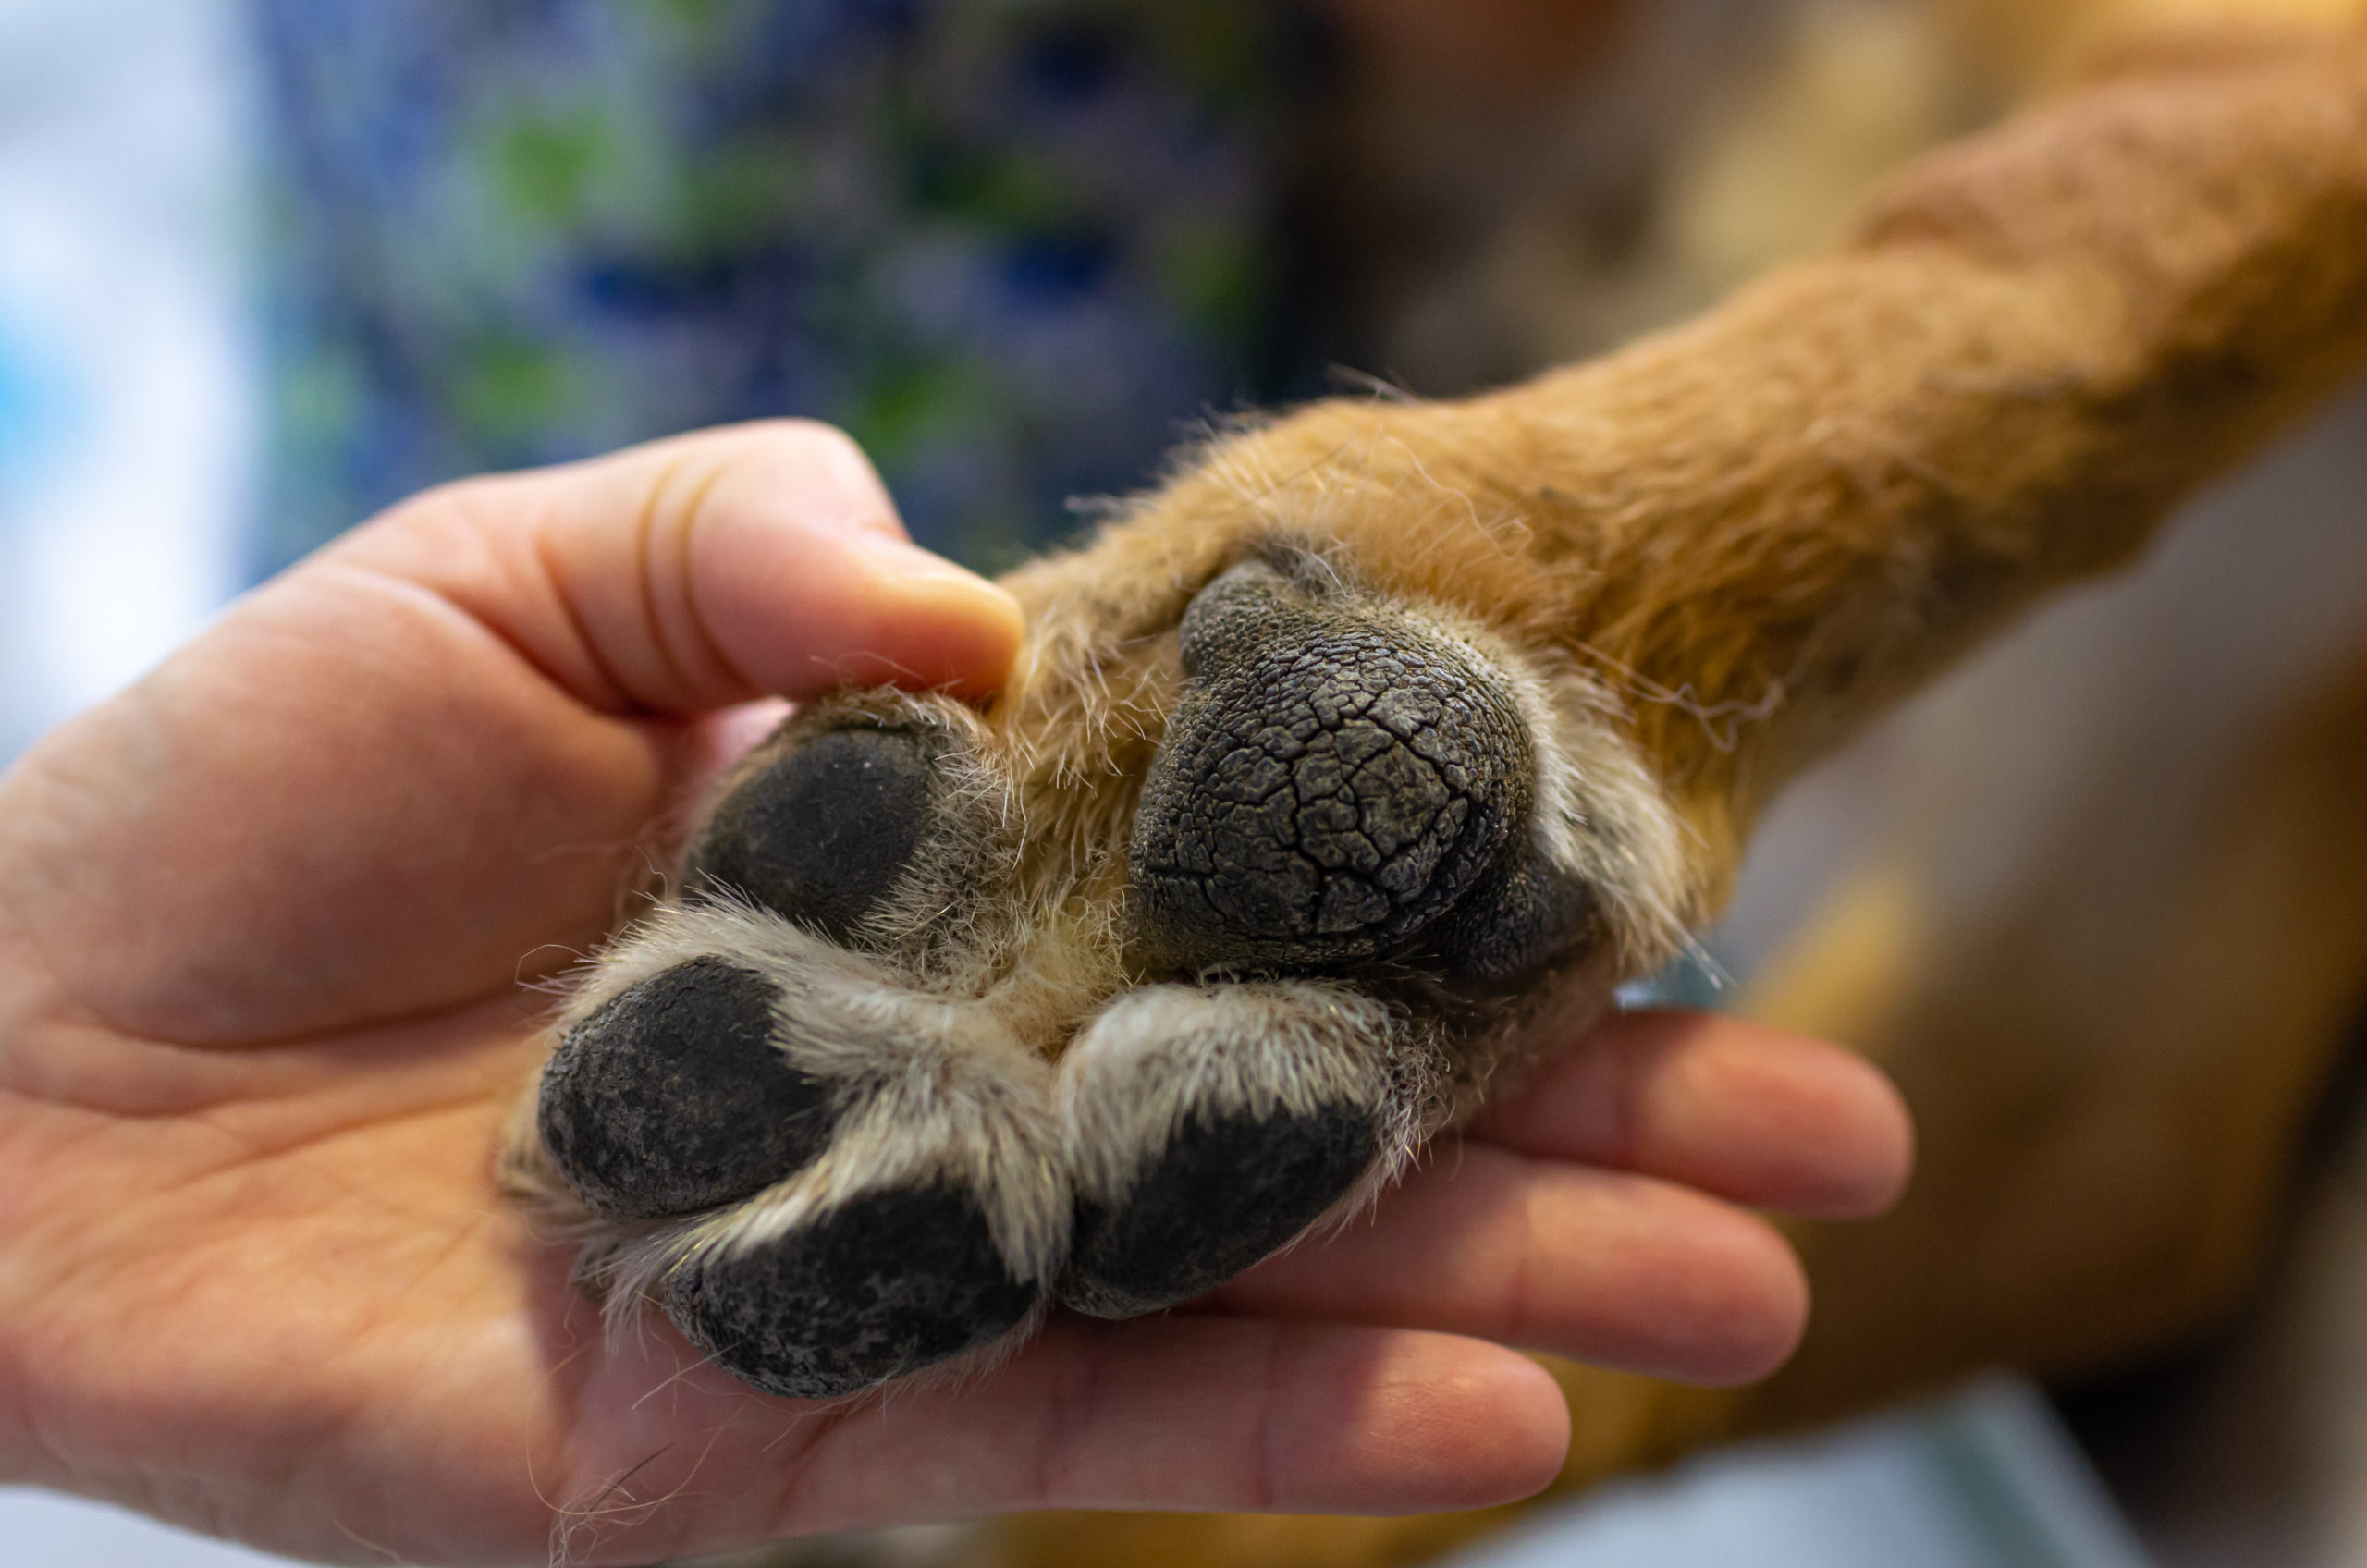 Checking a pet's feet health checks for animals